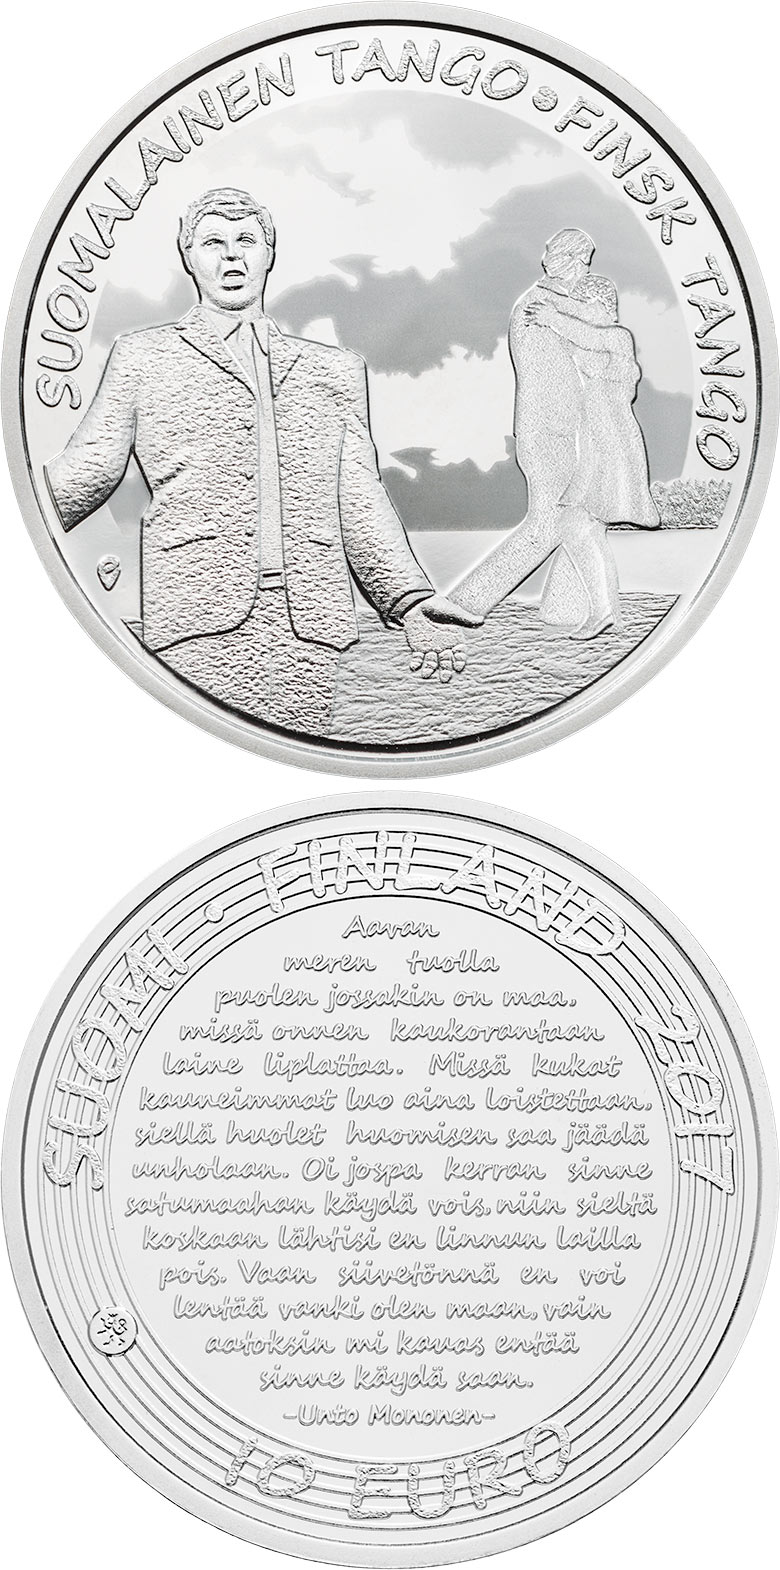 Image of 10 euro coin - Finnish tango | Finland 2017